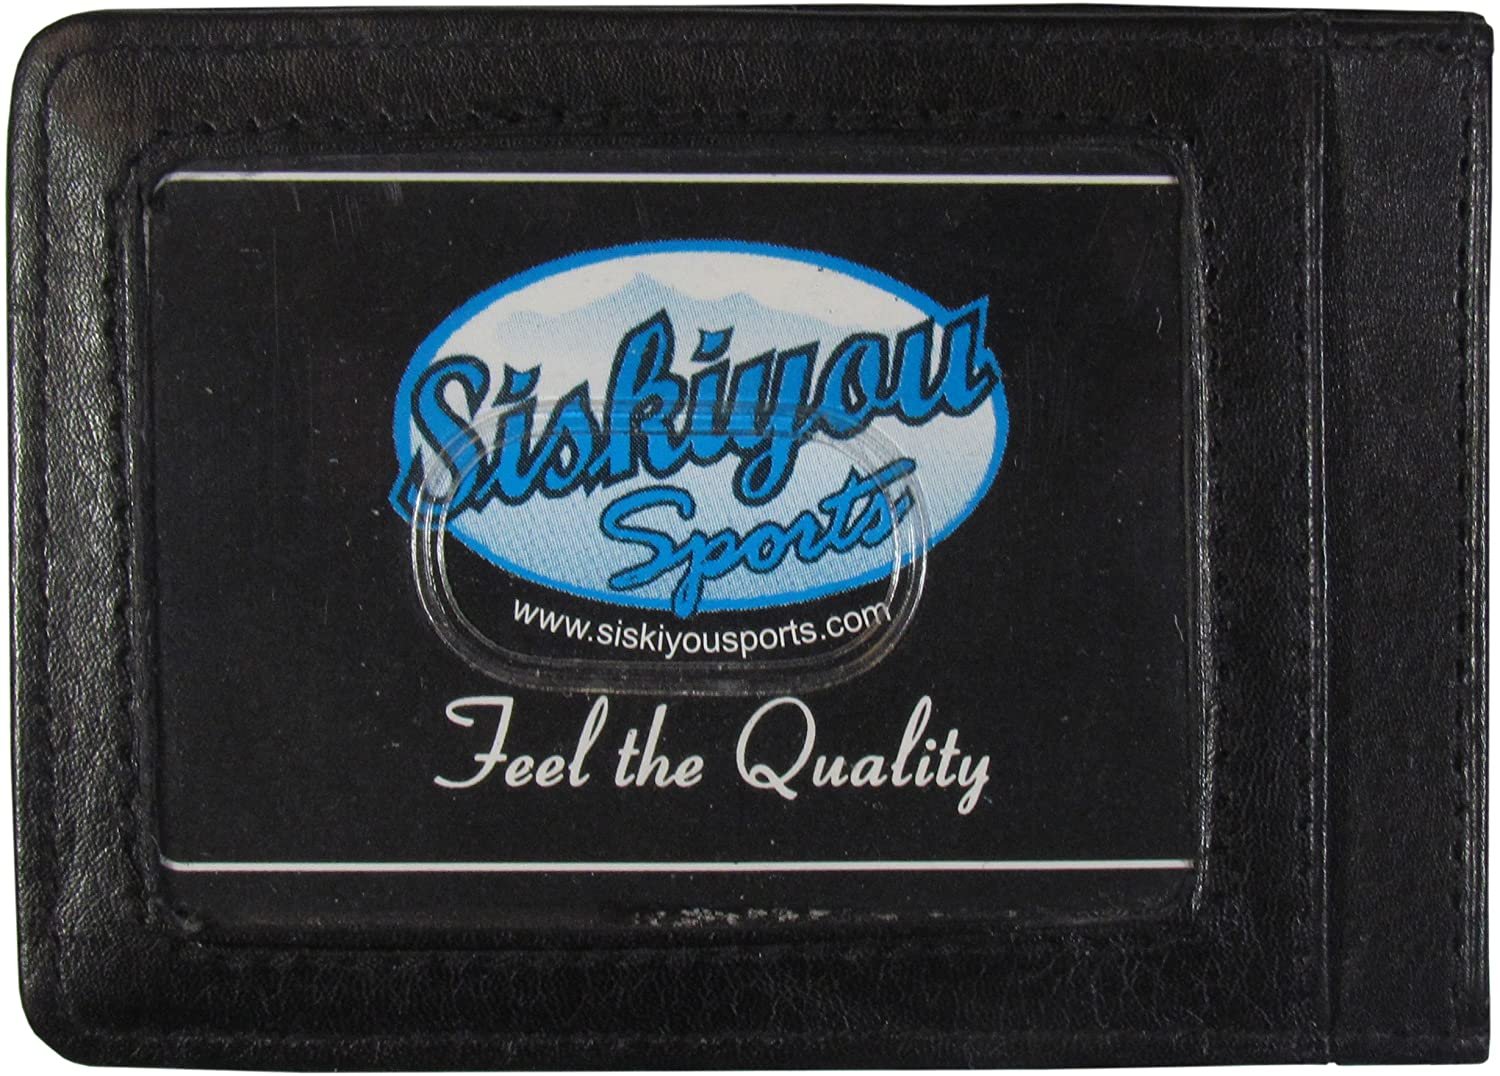 Mississippi State University Bulldogs Black Leather Wallet, Front Pocket Magnetic Money Clip, Printed Logo